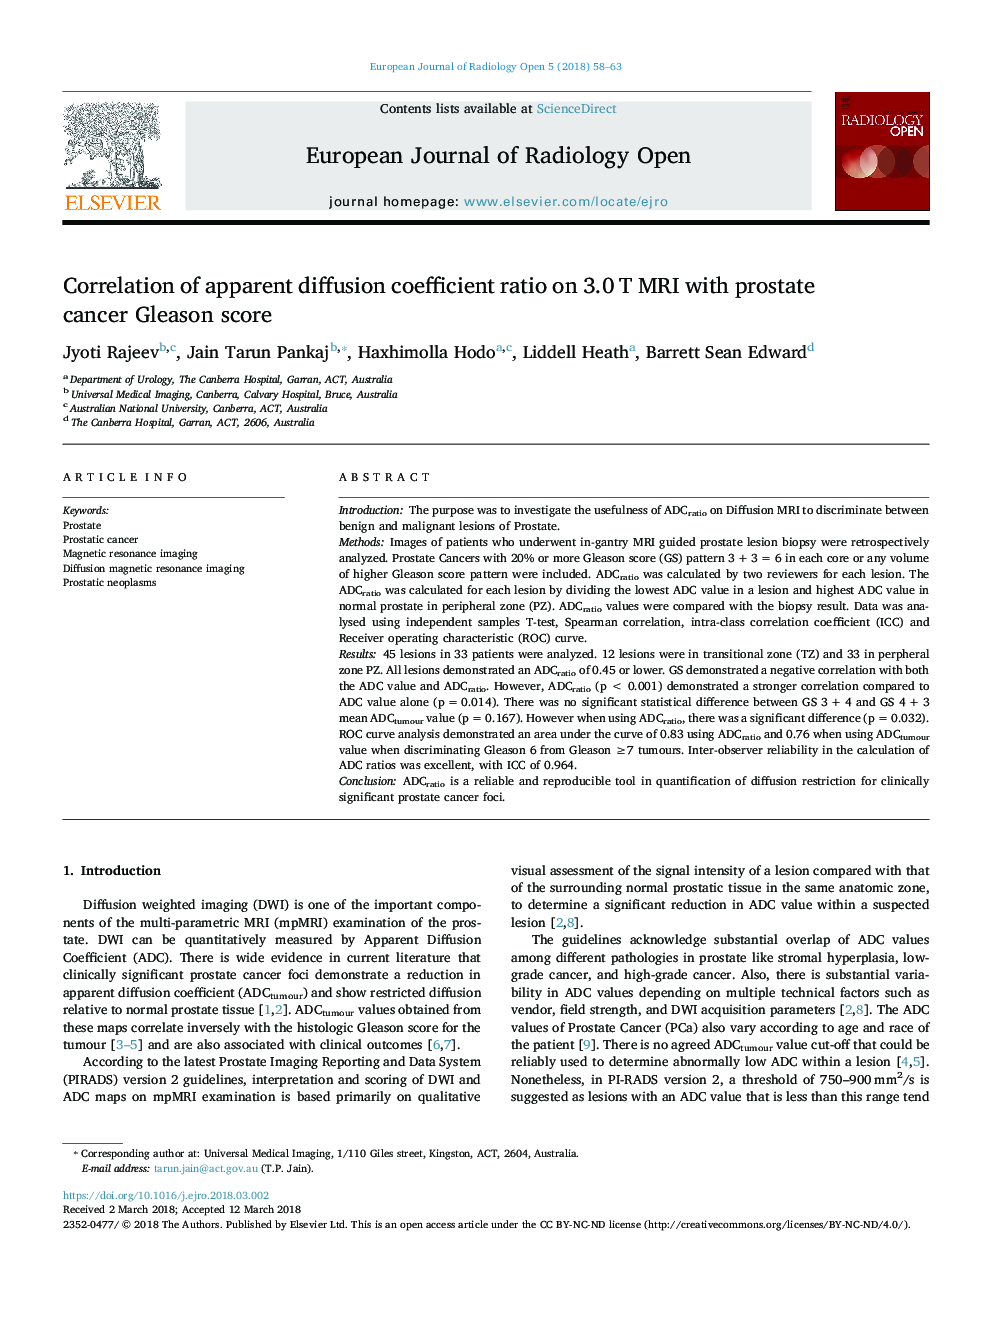 Correlation of apparent diffusion coefficient ratio on 3.0â¯T MRI with prostate cancer Gleason score